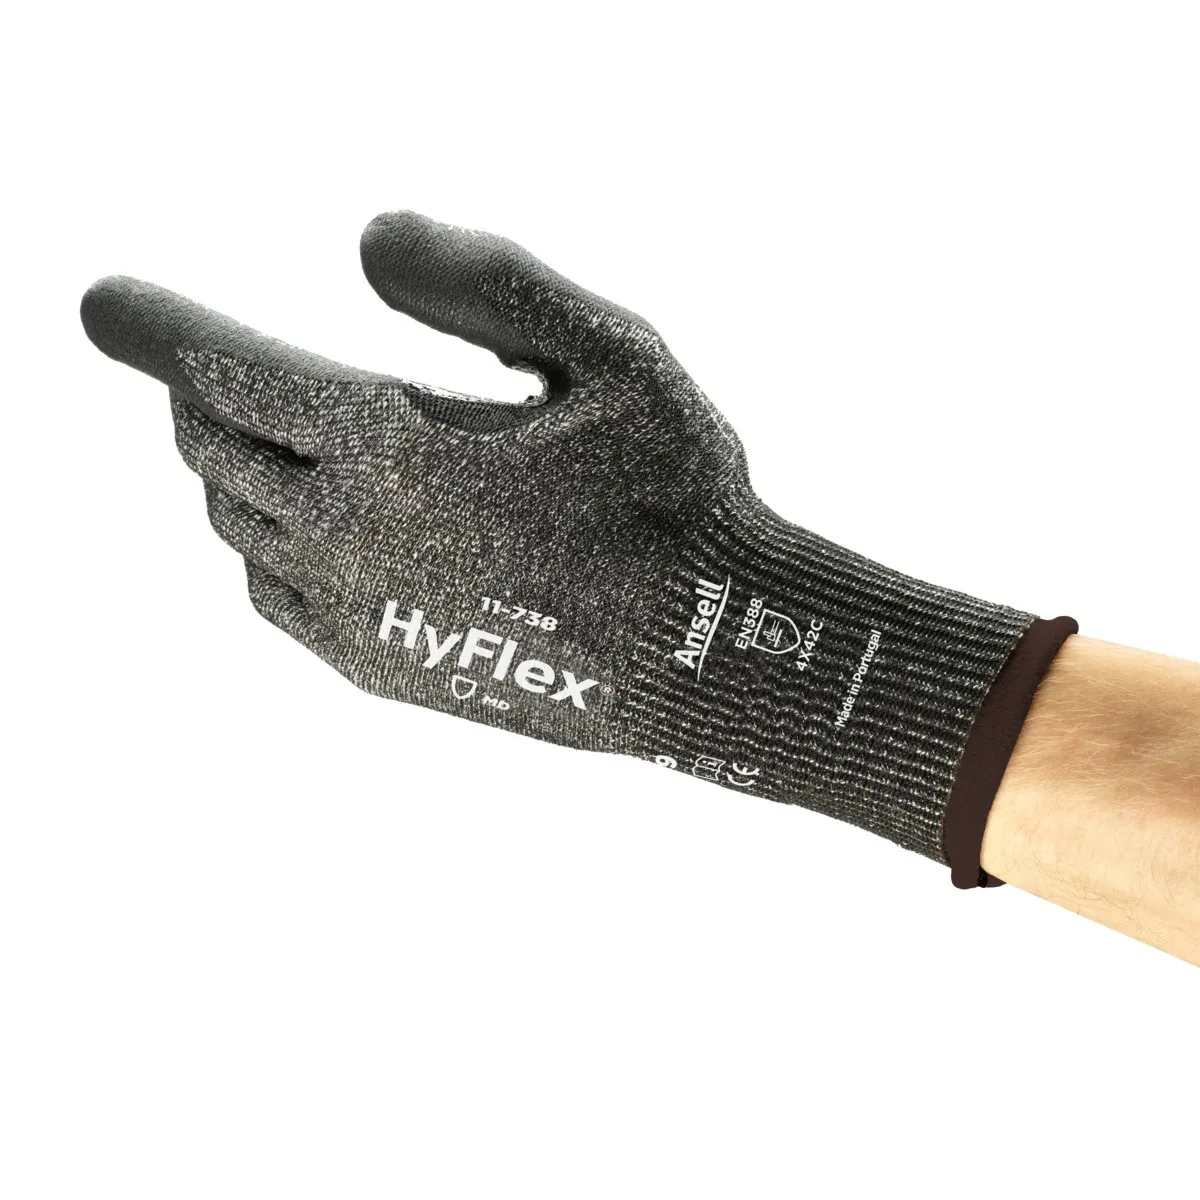 Zaštitne rukavice HYFLEX 11-738 tamno sive - Ansell - PAR 